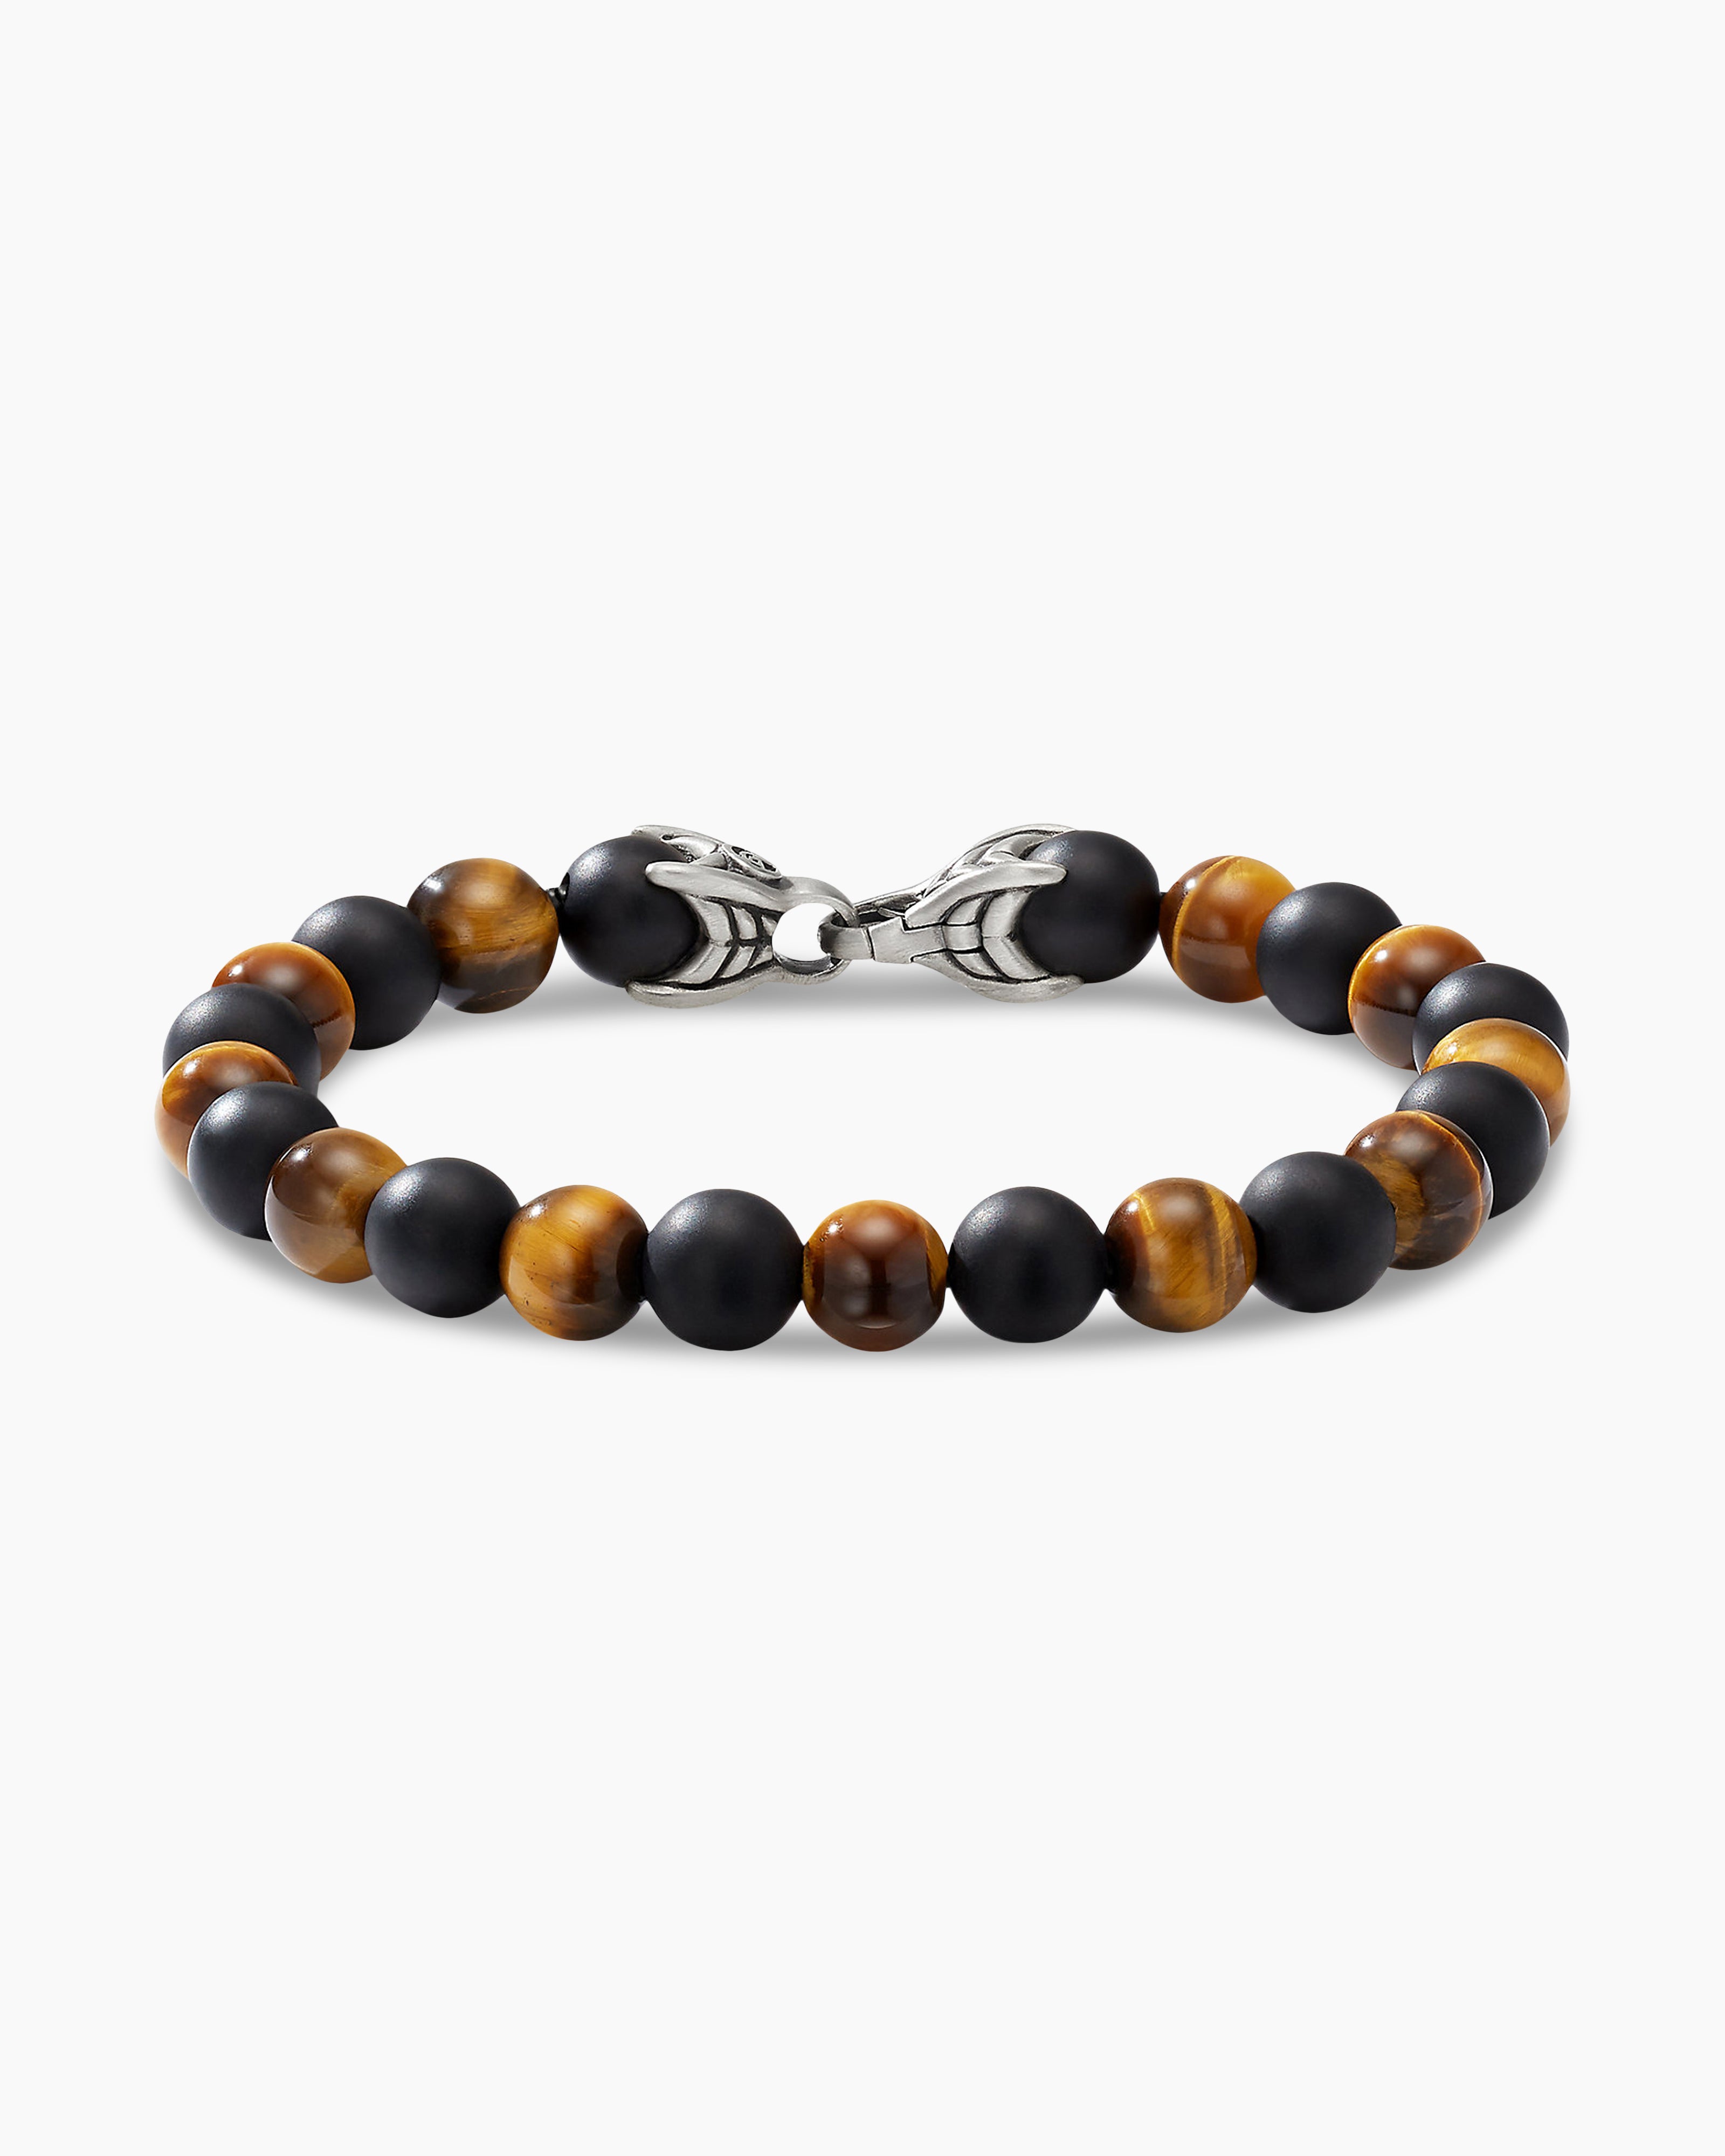 David Yurman Spiritual Beads Bracelet with Black Onyx